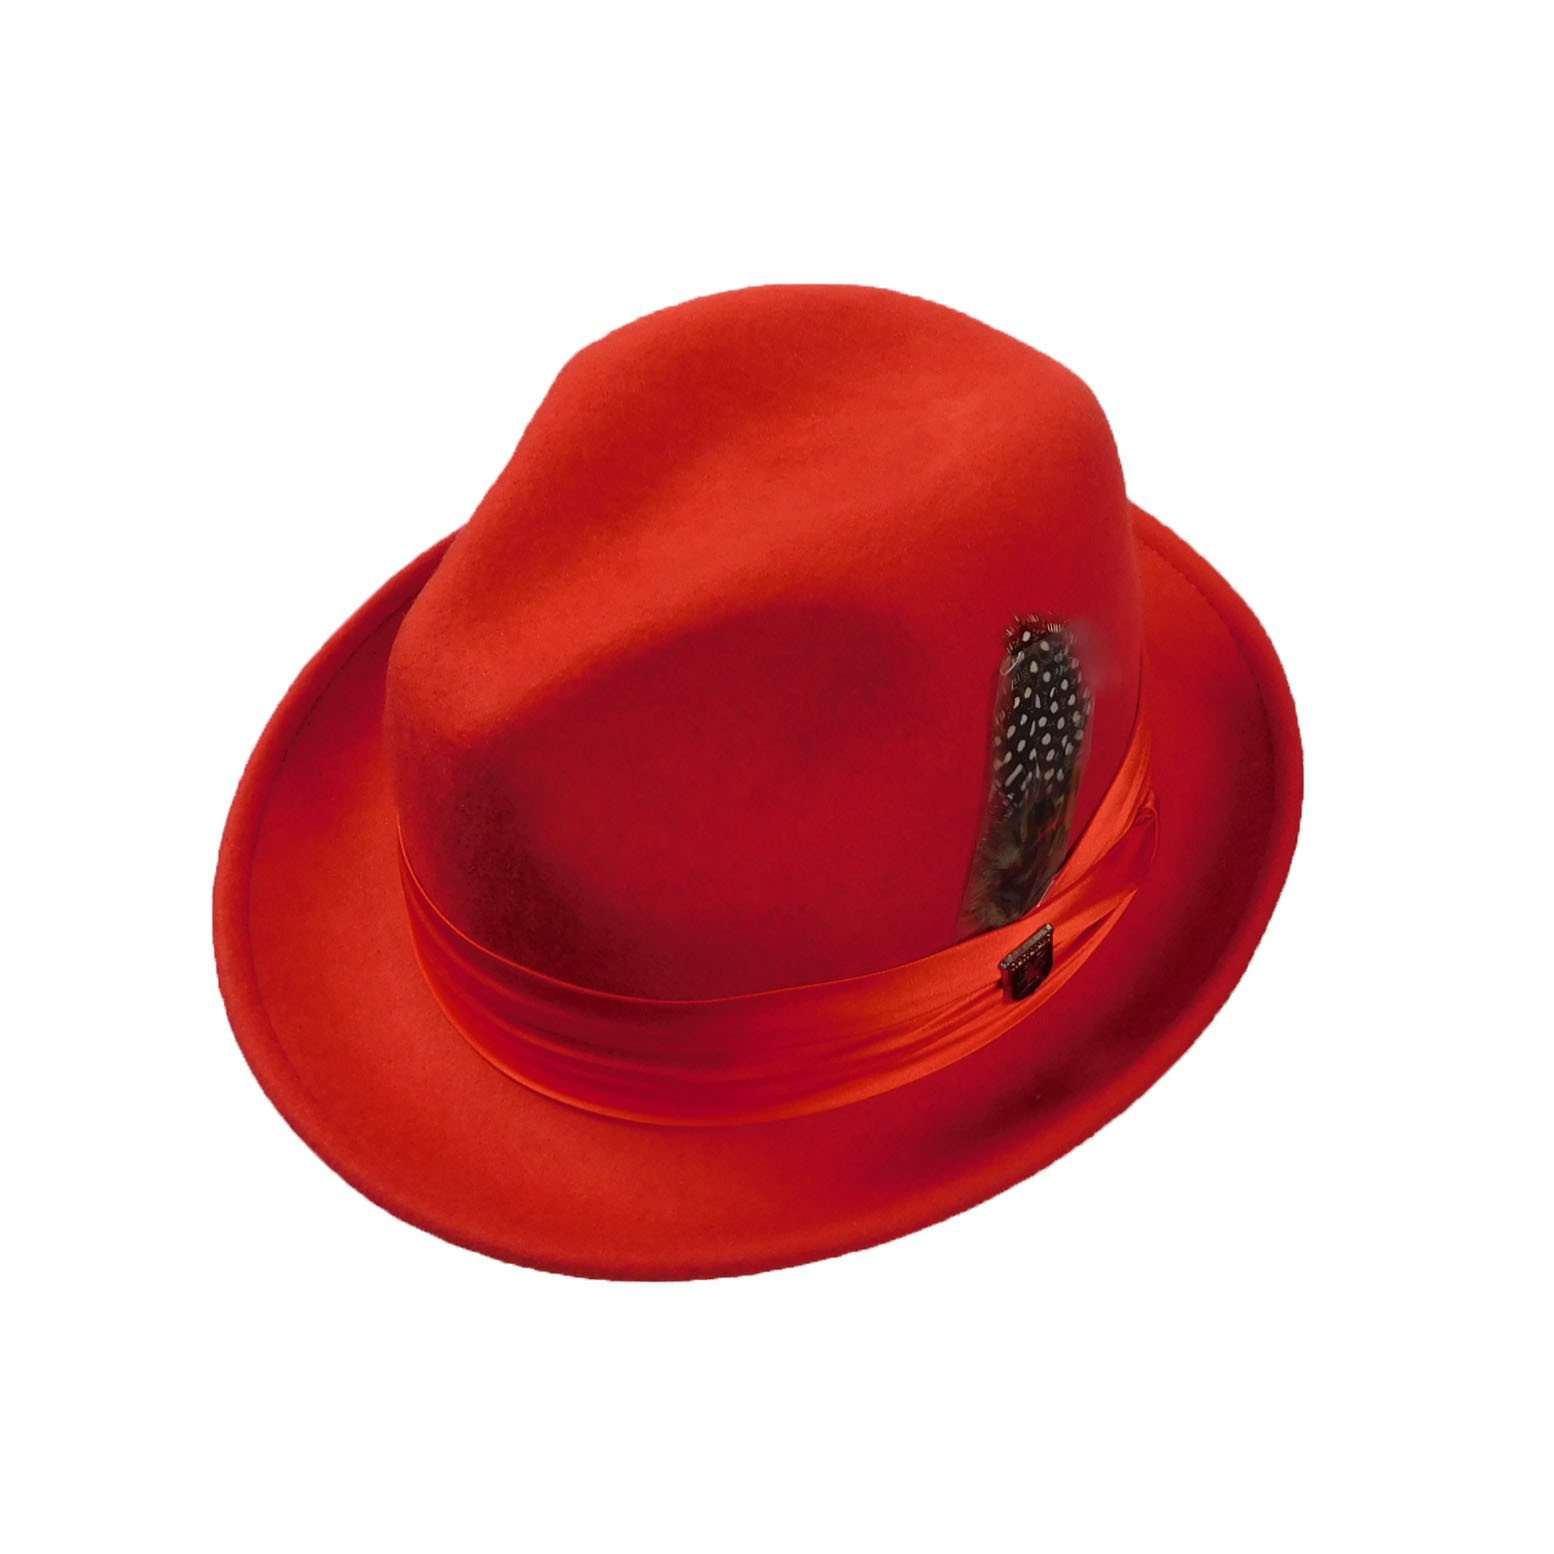 Stacy Adams Snap Brim Fedora Hat - Red Fedora Hat Stacy Adams Hats    